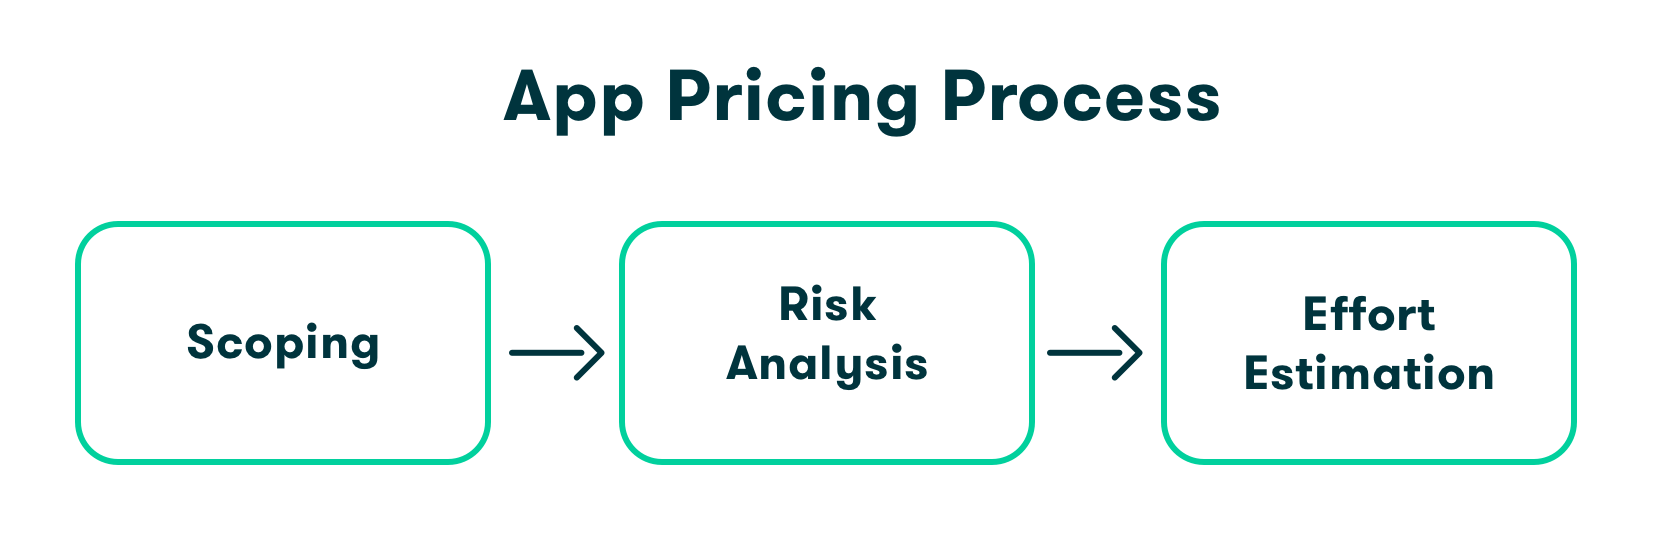 App pricing process